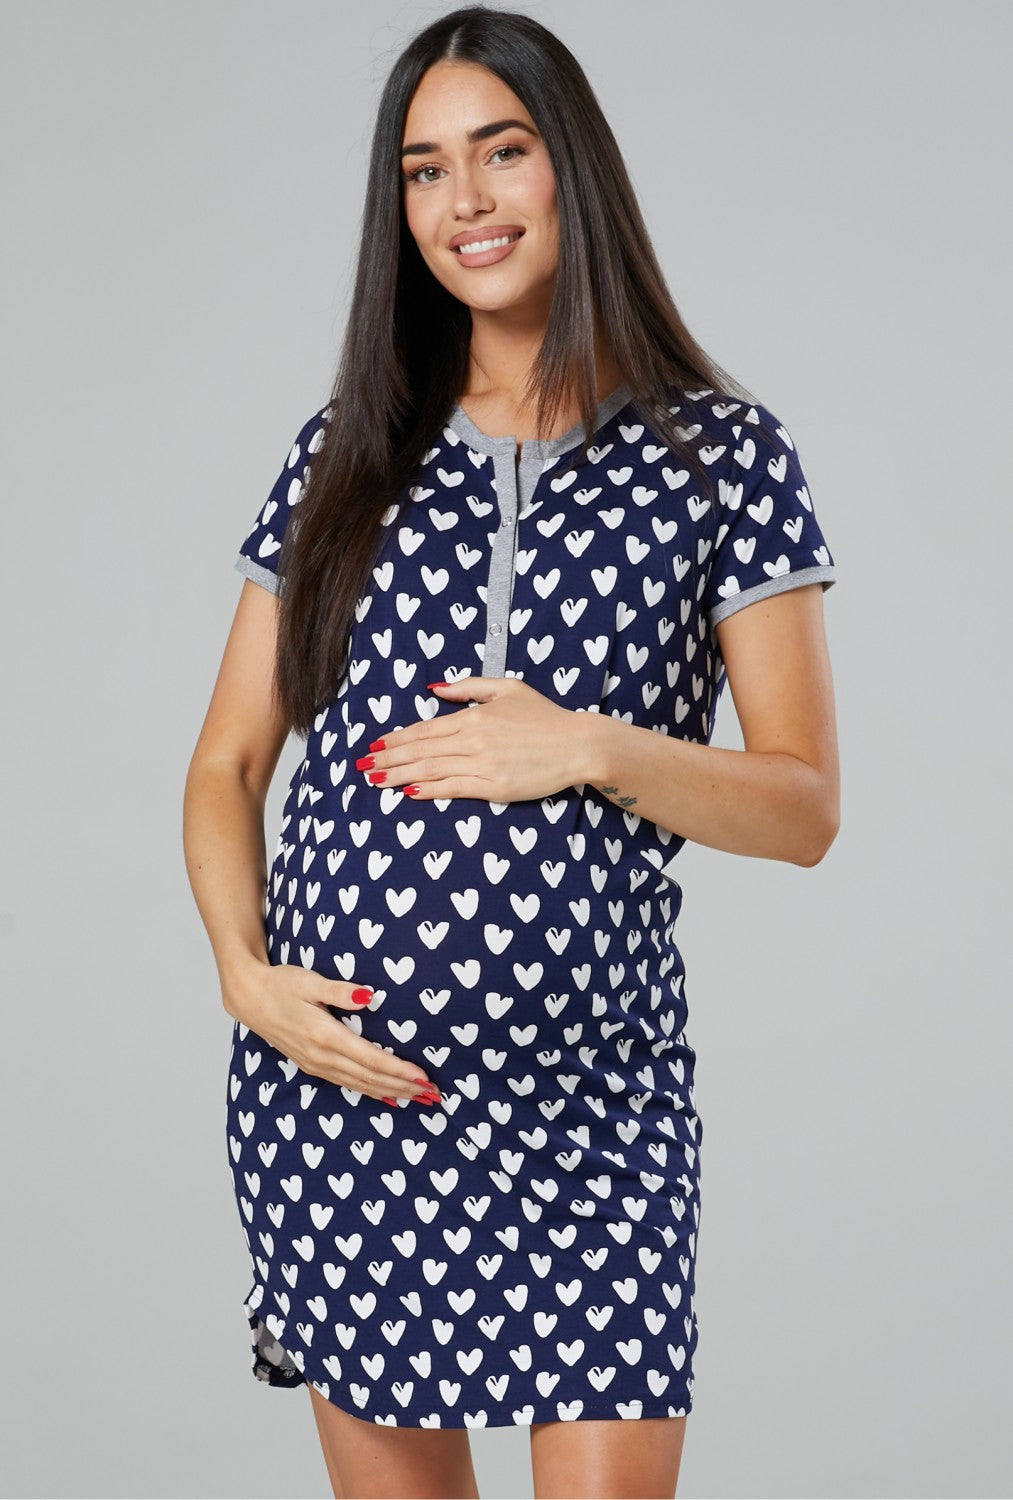 Maternity Nursing Patterned Nightshirt